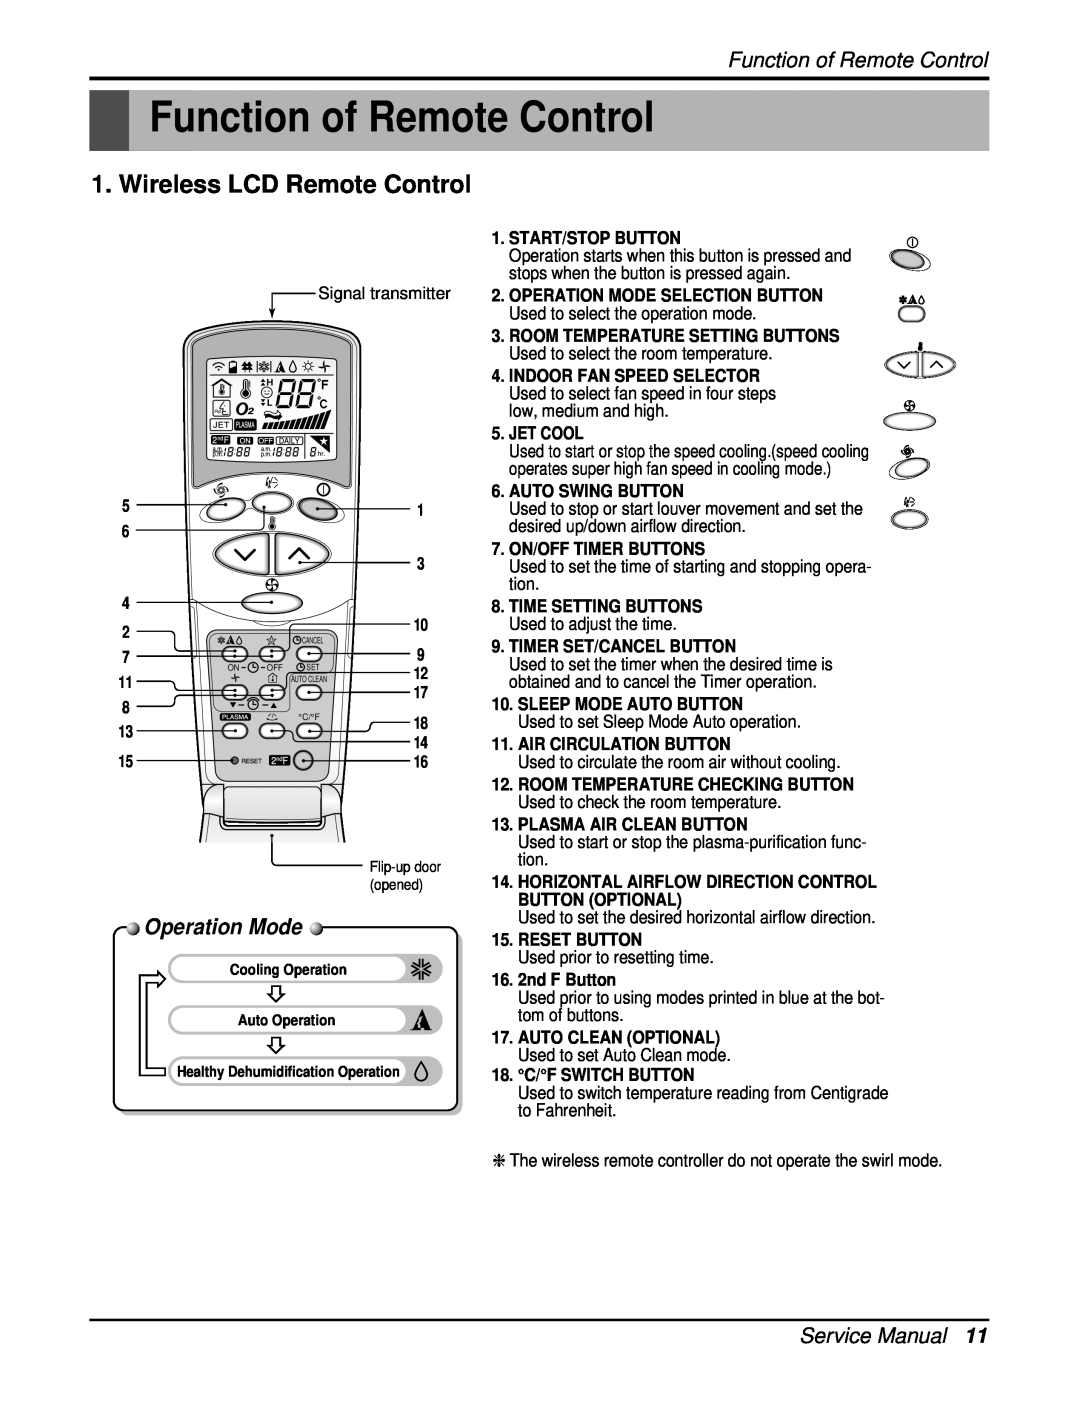 Heat Controller DMC36CA-1, DMC24CA-1 manual Function of Remote Control, Wireless LCD Remote Control, Operation Mode 